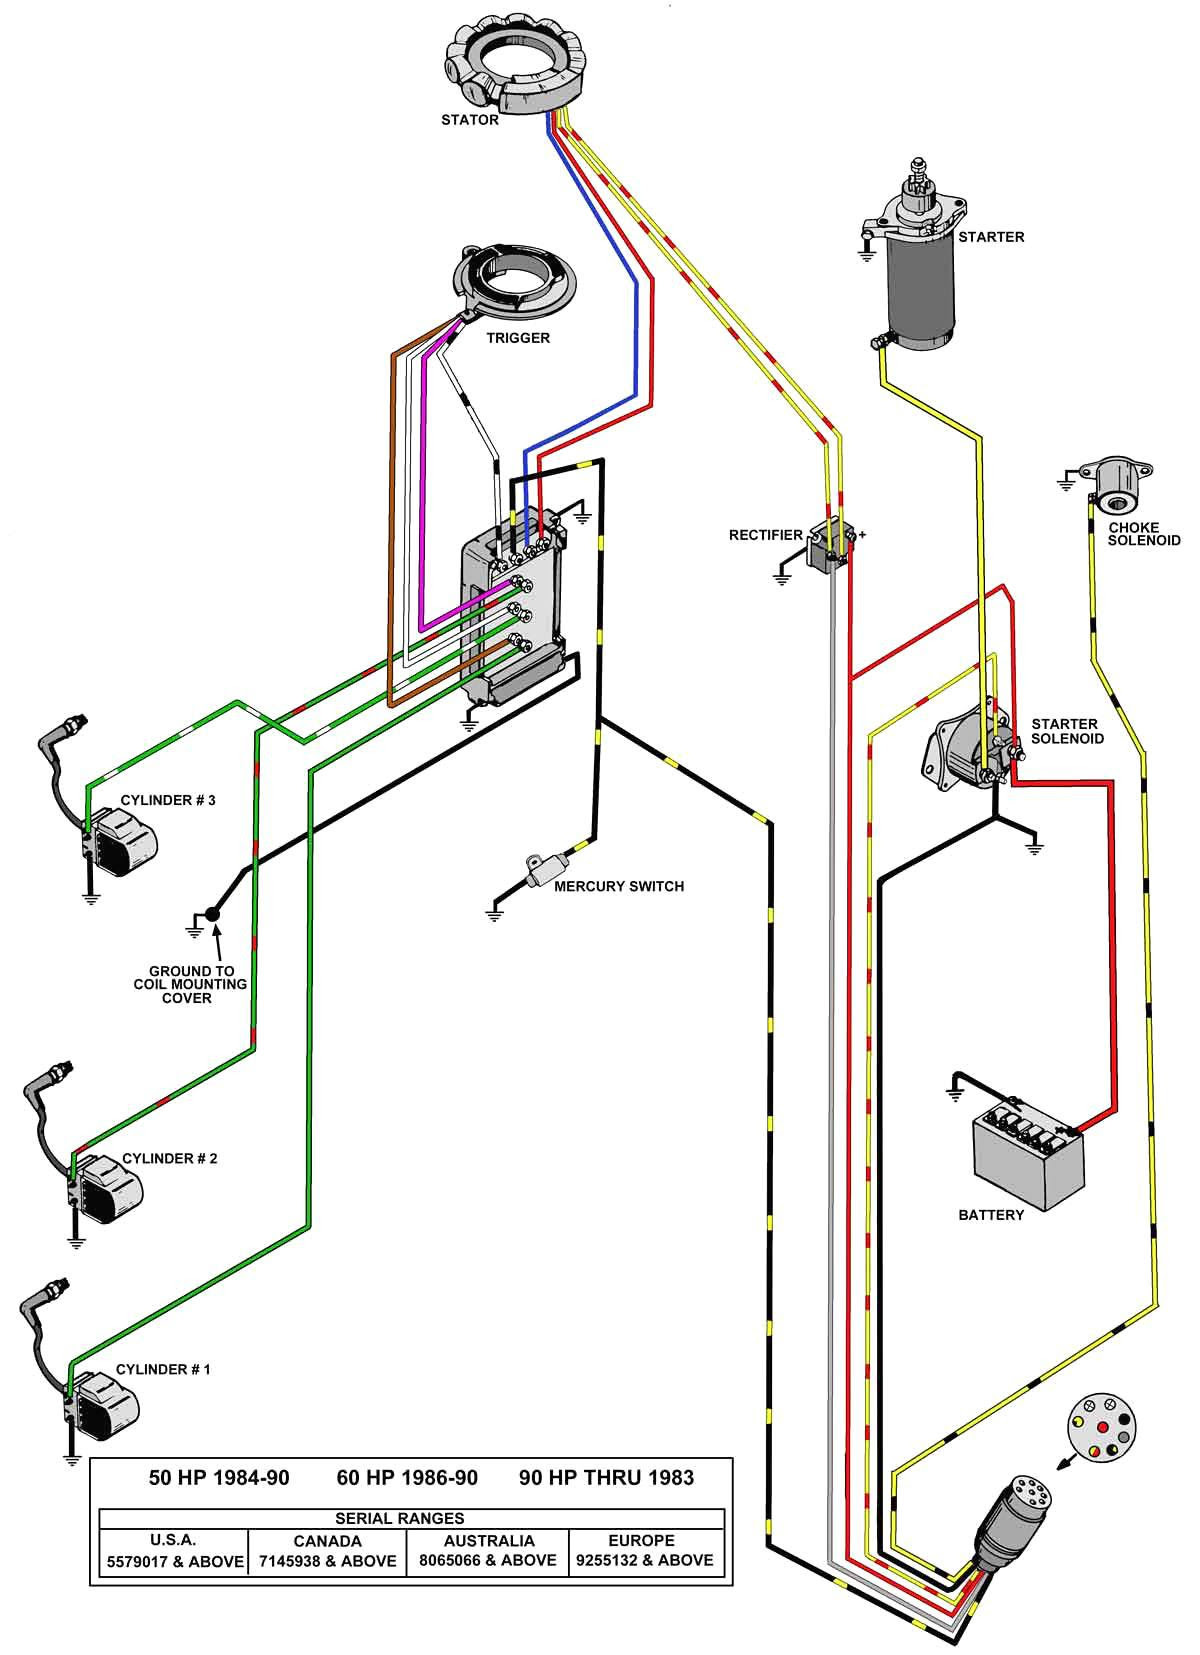 Autometer Tach Wiring Diagram